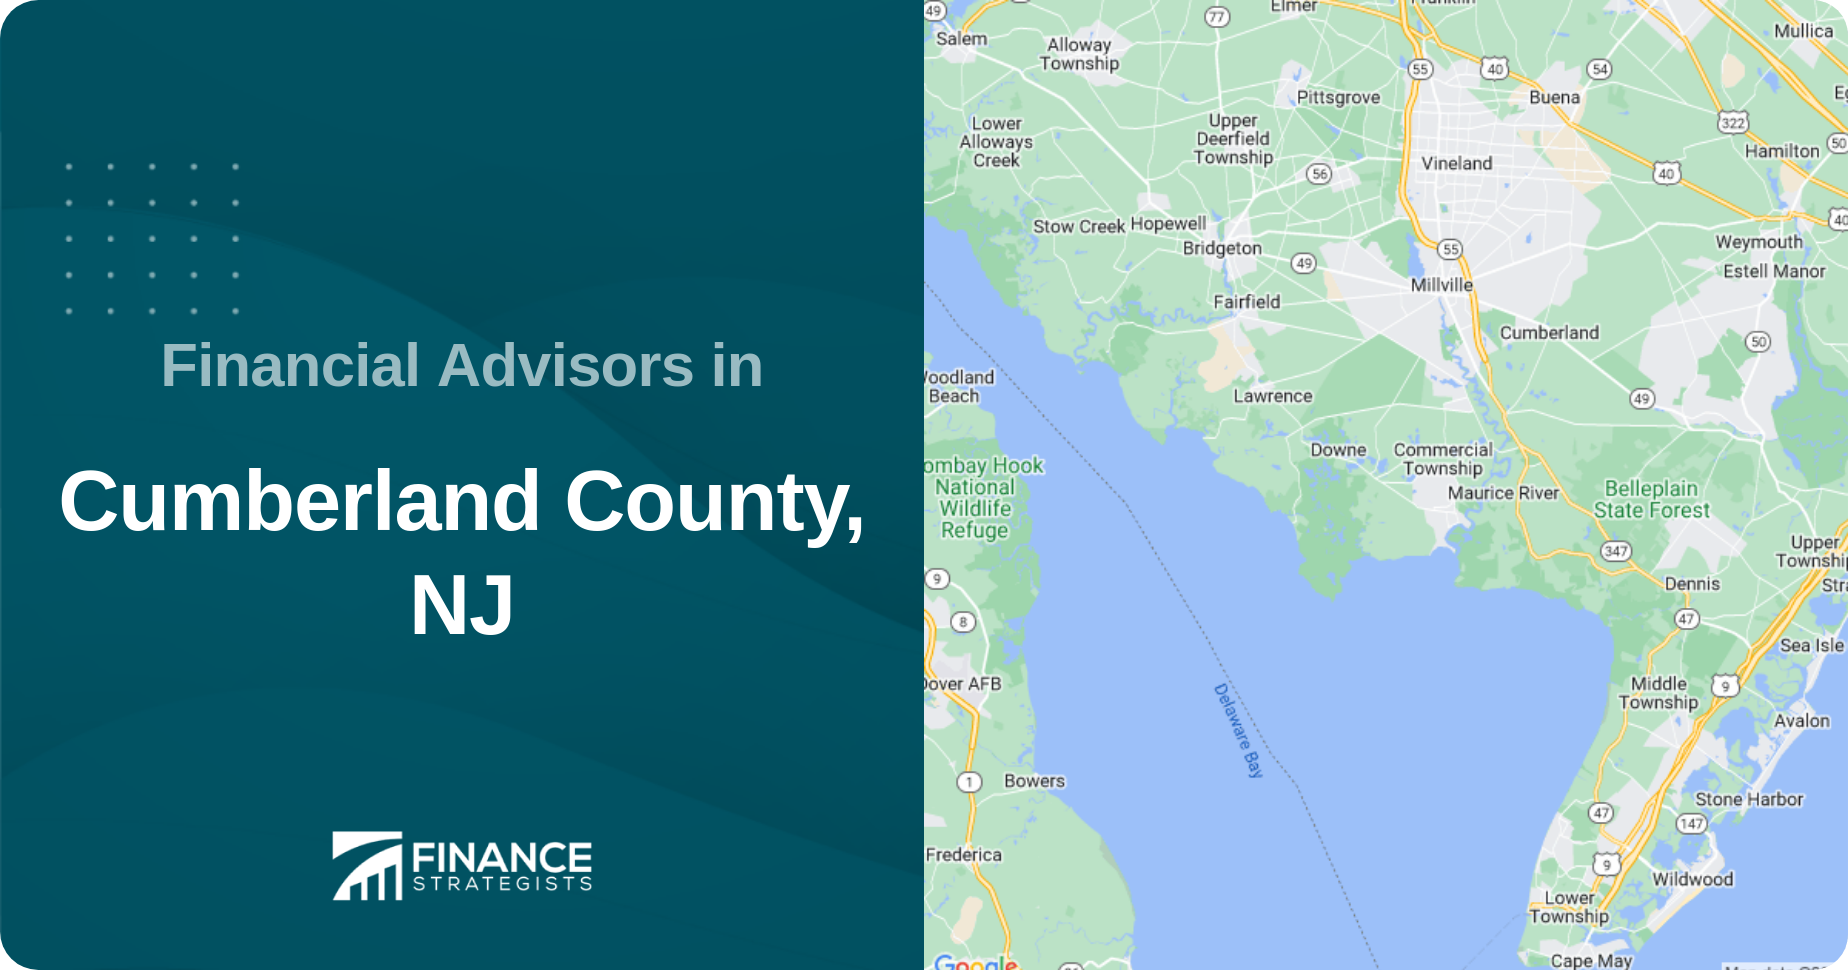 Financial Advisors in Cumberland County, NJ